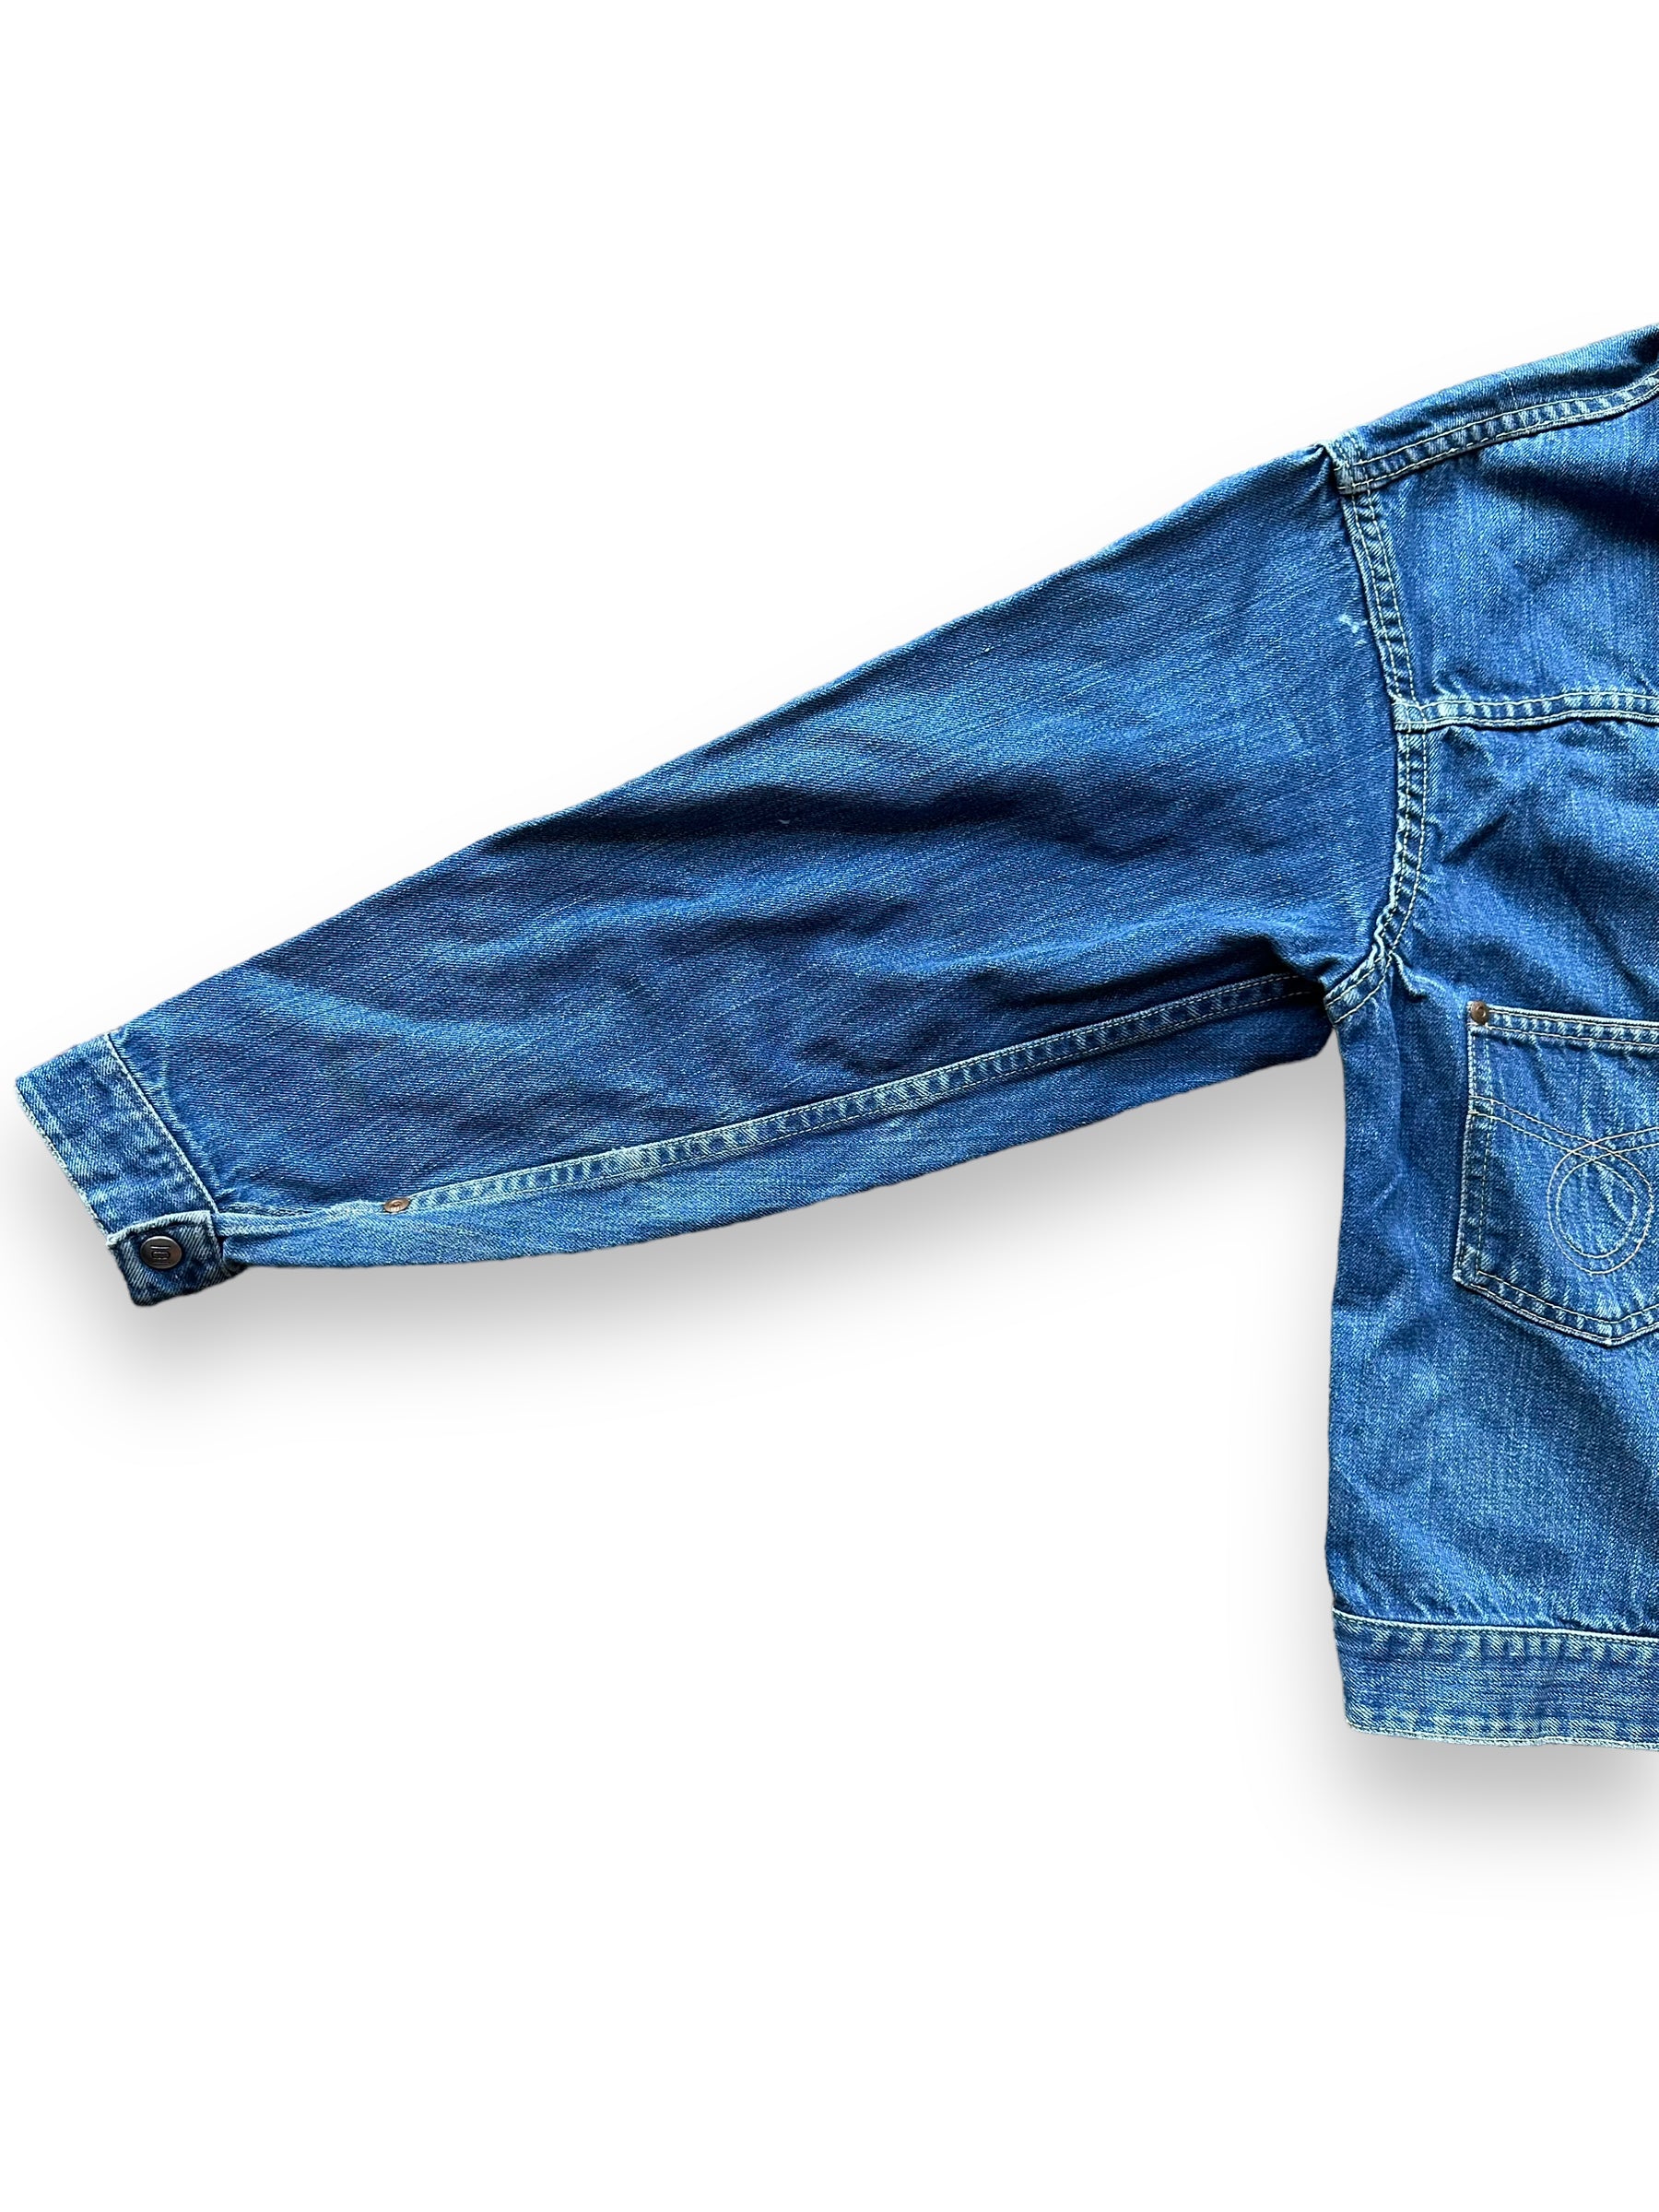 Right Sleeve View of Vintage Montgomery Ward 101 Selvedge Denim Jacket SZ S | Vintage Jean Jacket Seattle | Seattle Vintage Denim